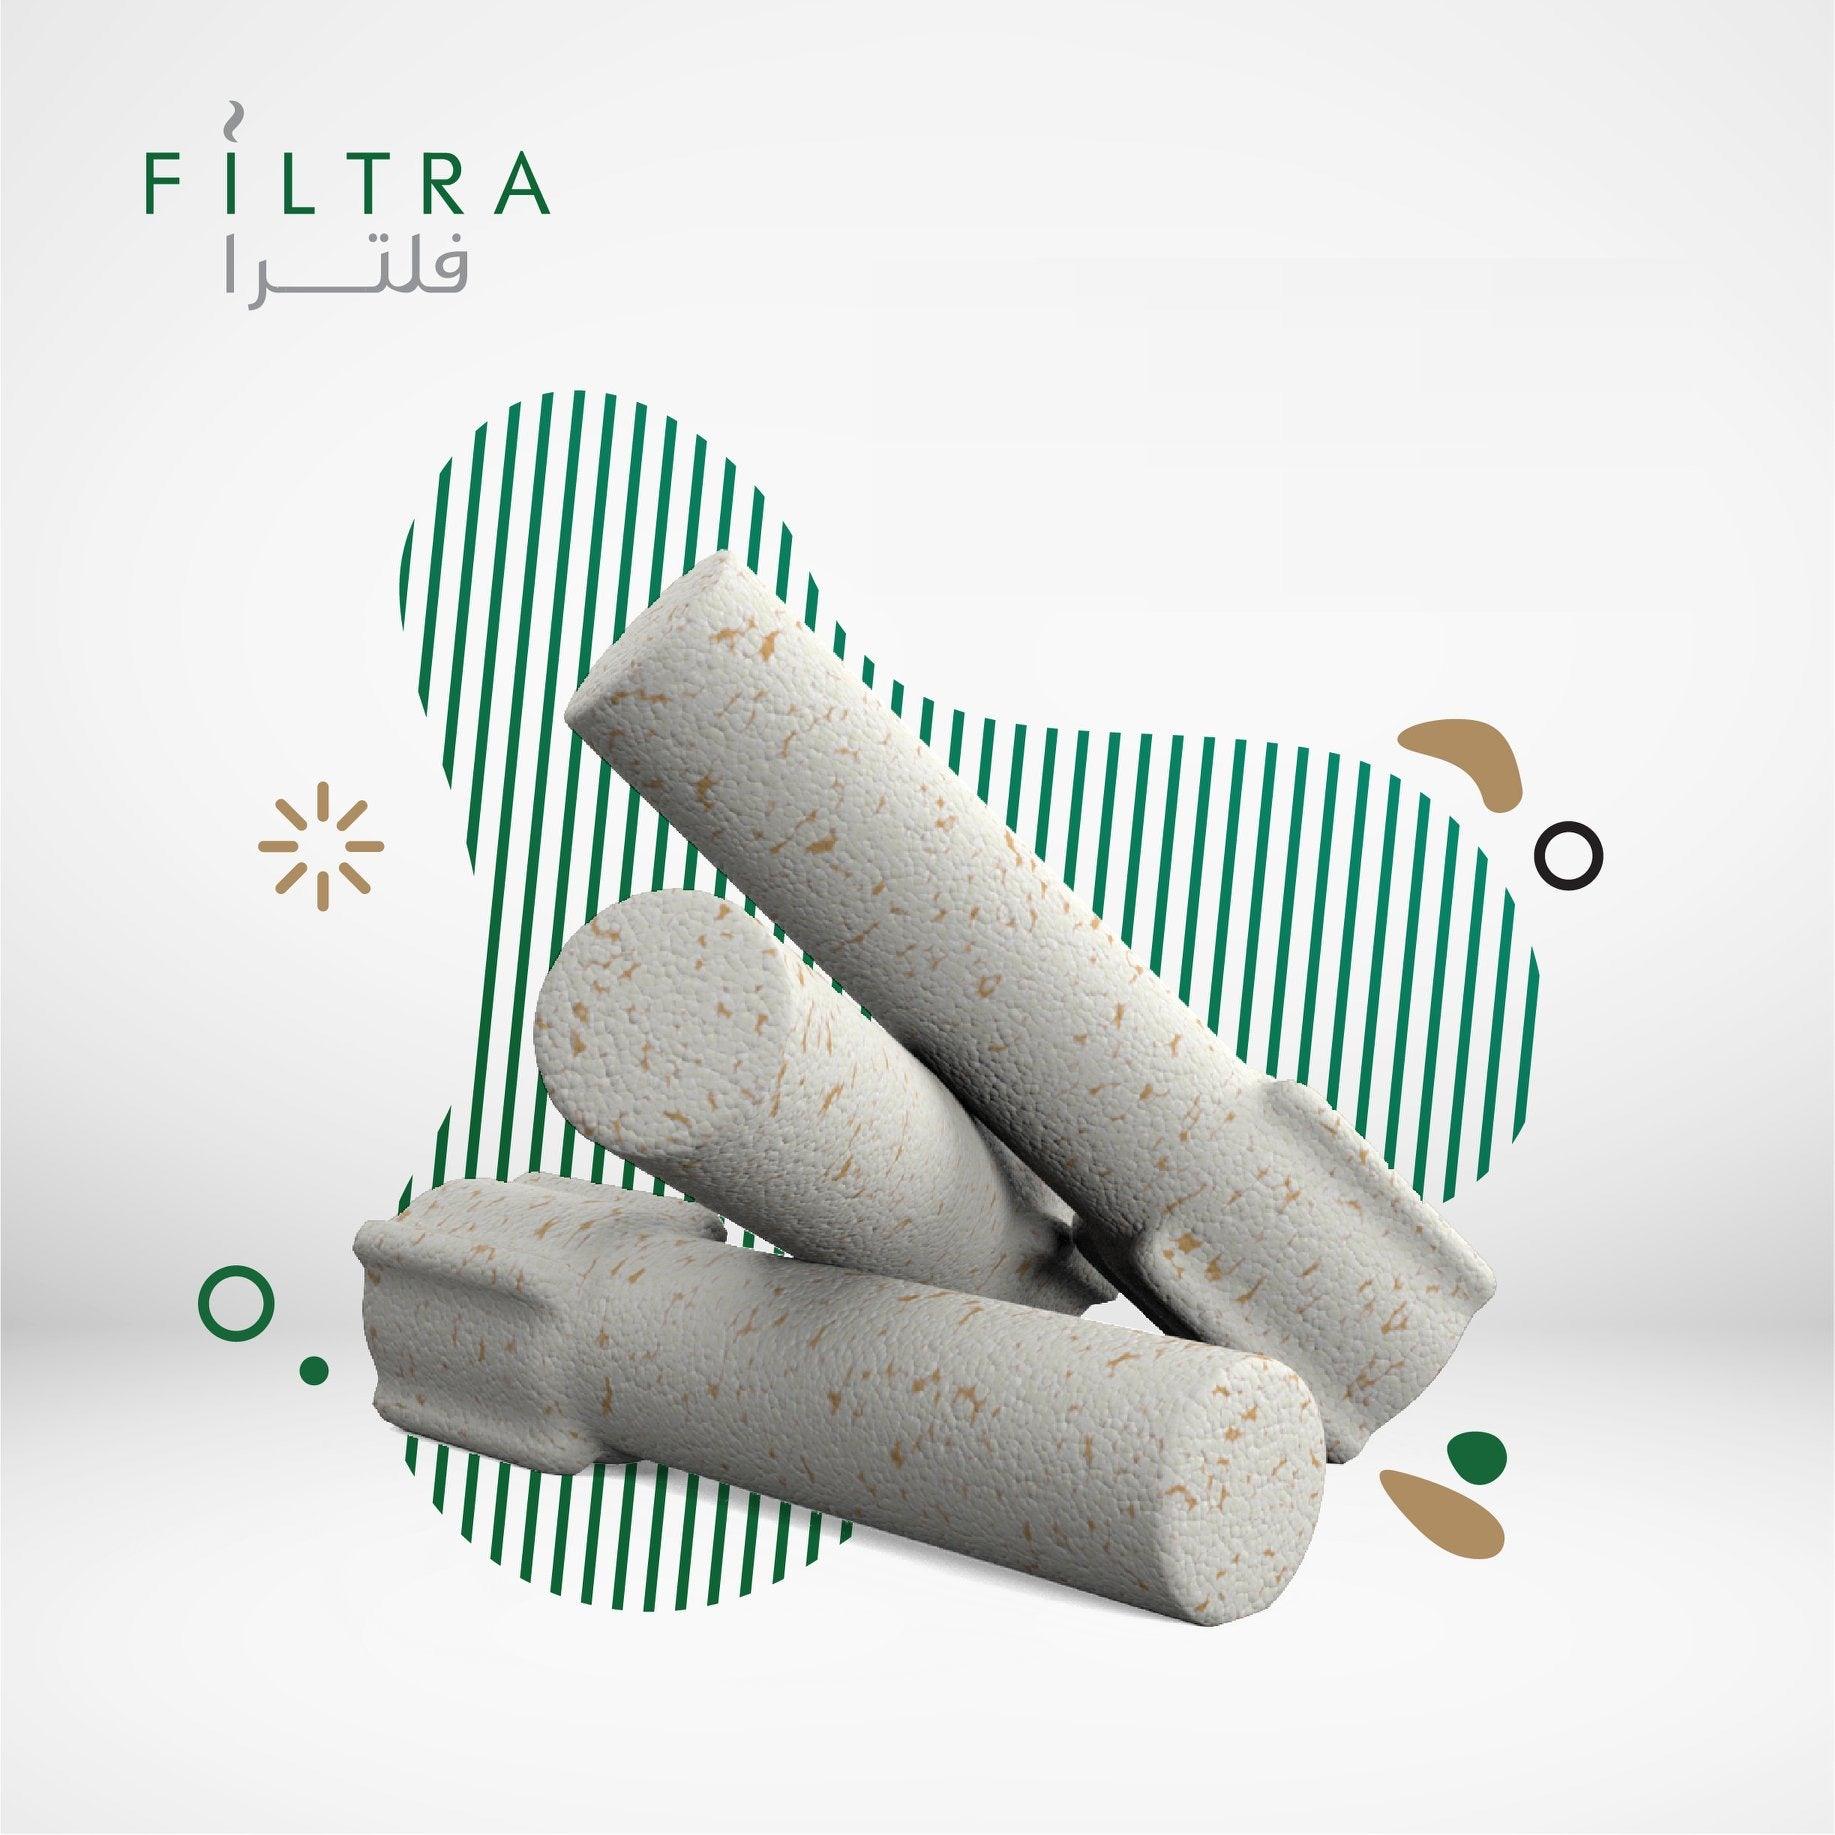 Filtra box of 4 filters - علبه فلاتر بربيش من فلترا - Shishabox